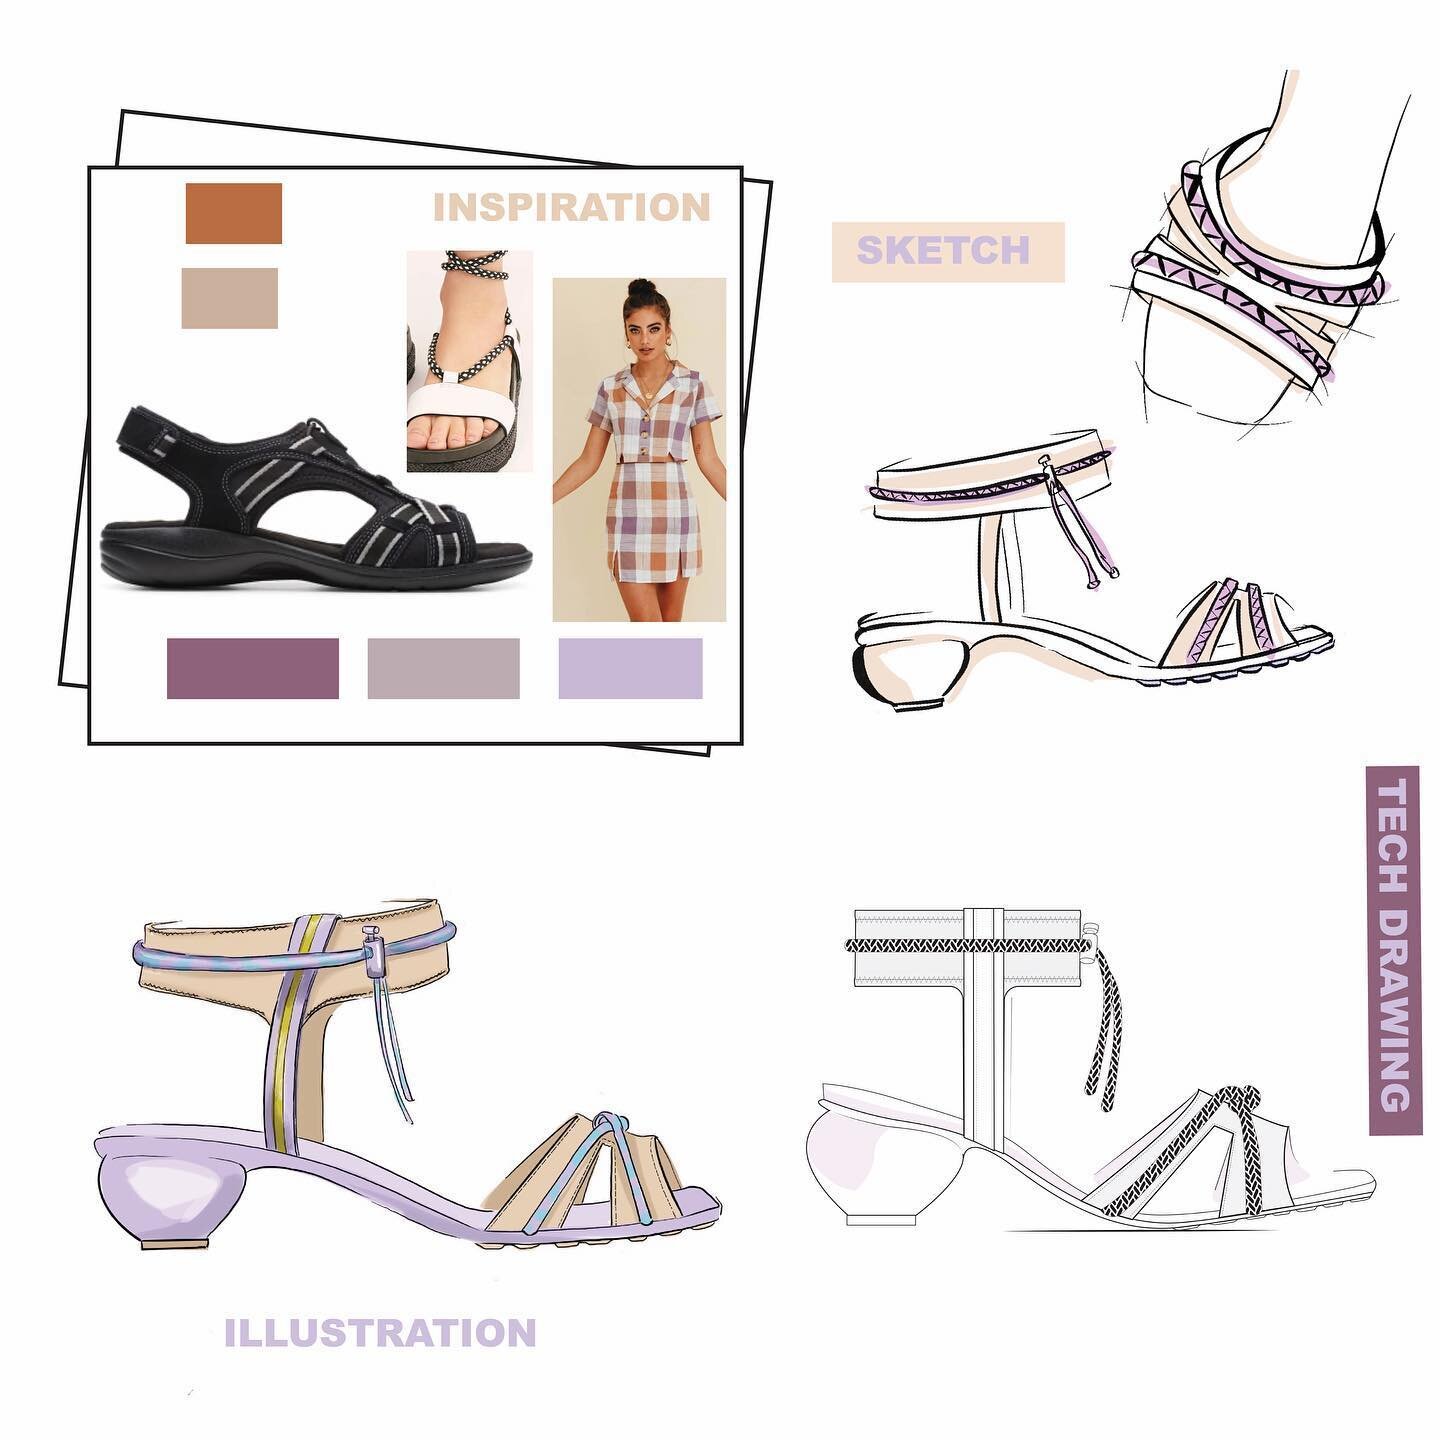 Design process - sketch club #design #inspiration #sketching #sketch #footweardesign #shoedesign #shoesketch #shoes #sporty #inspo #designer #shoedesigner #shoechallenge  #illustration #shoeillustration #drawing